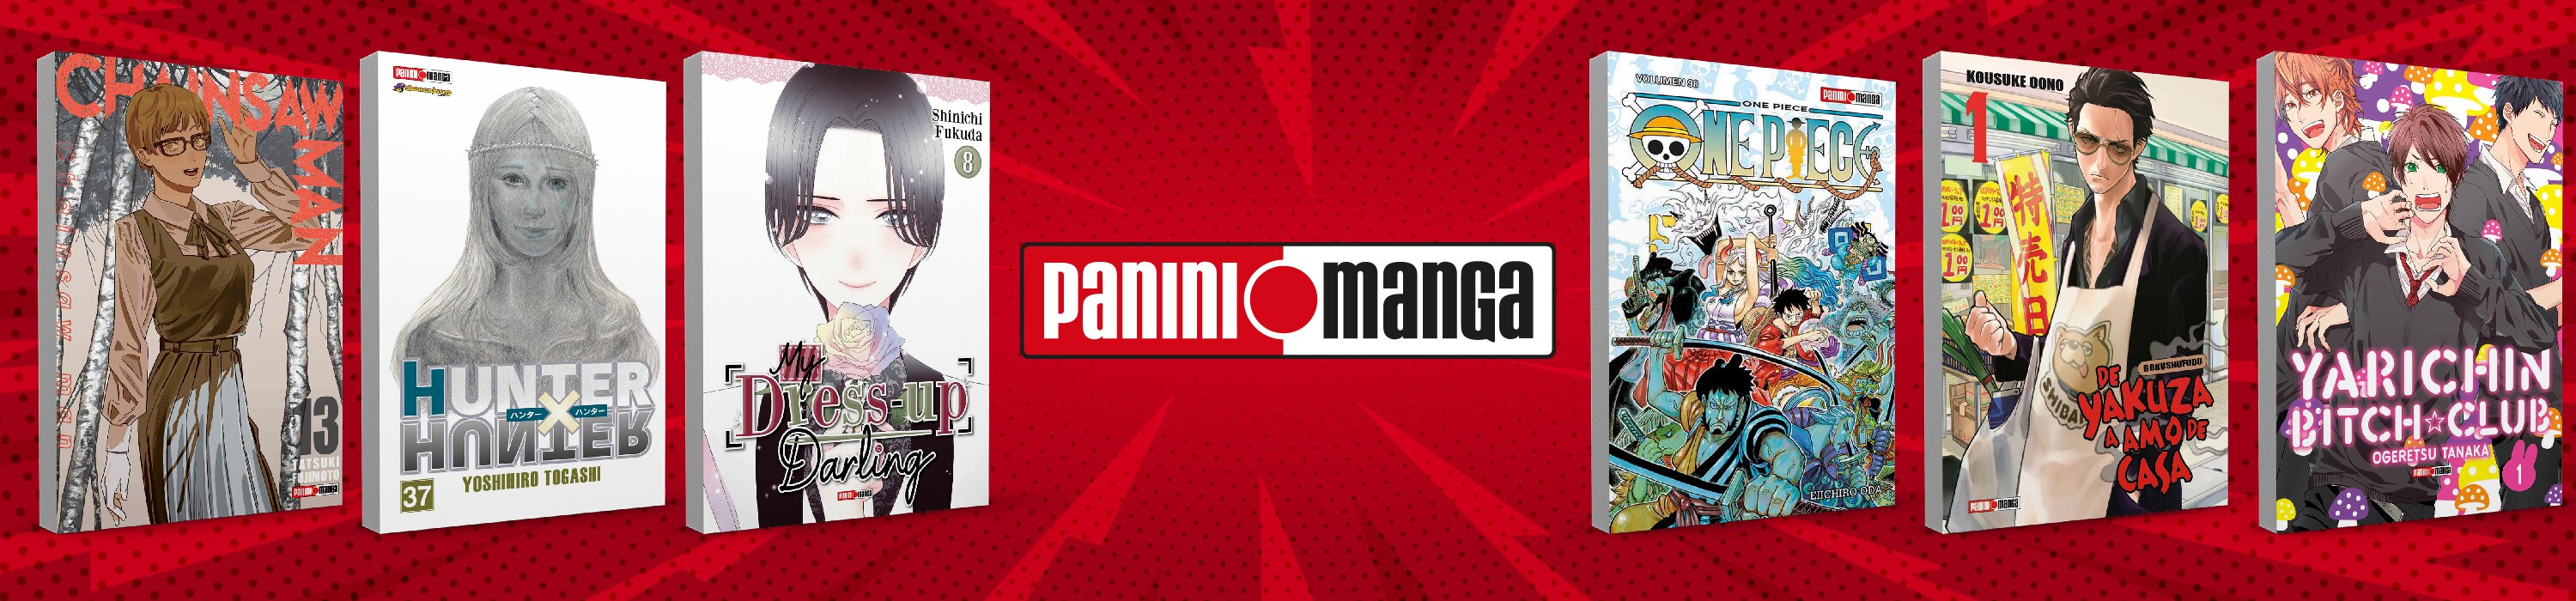 Banner Panini